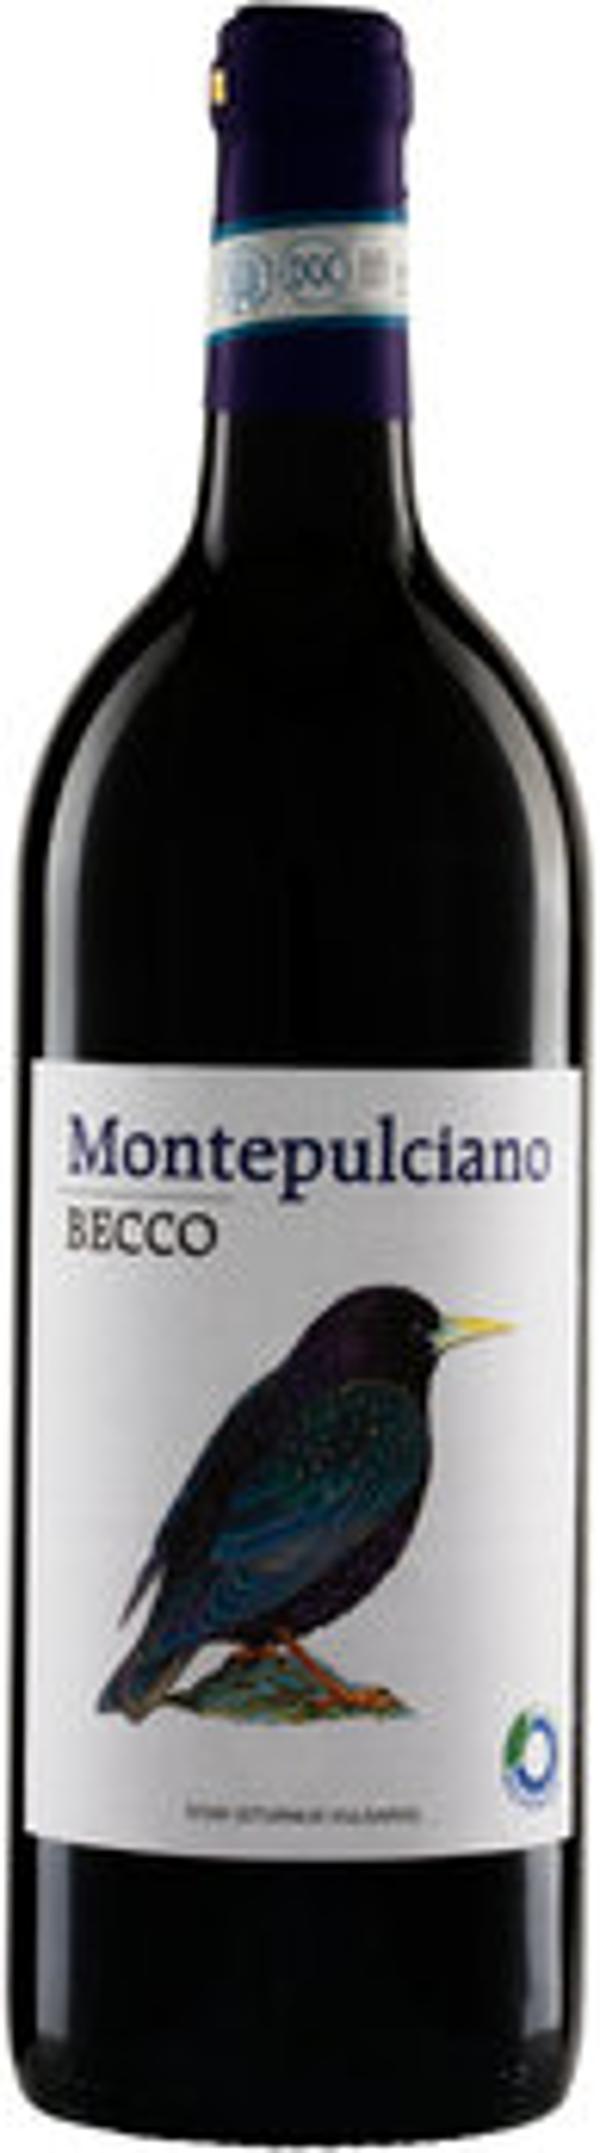 Produktfoto zu Becco Montepulciano rot